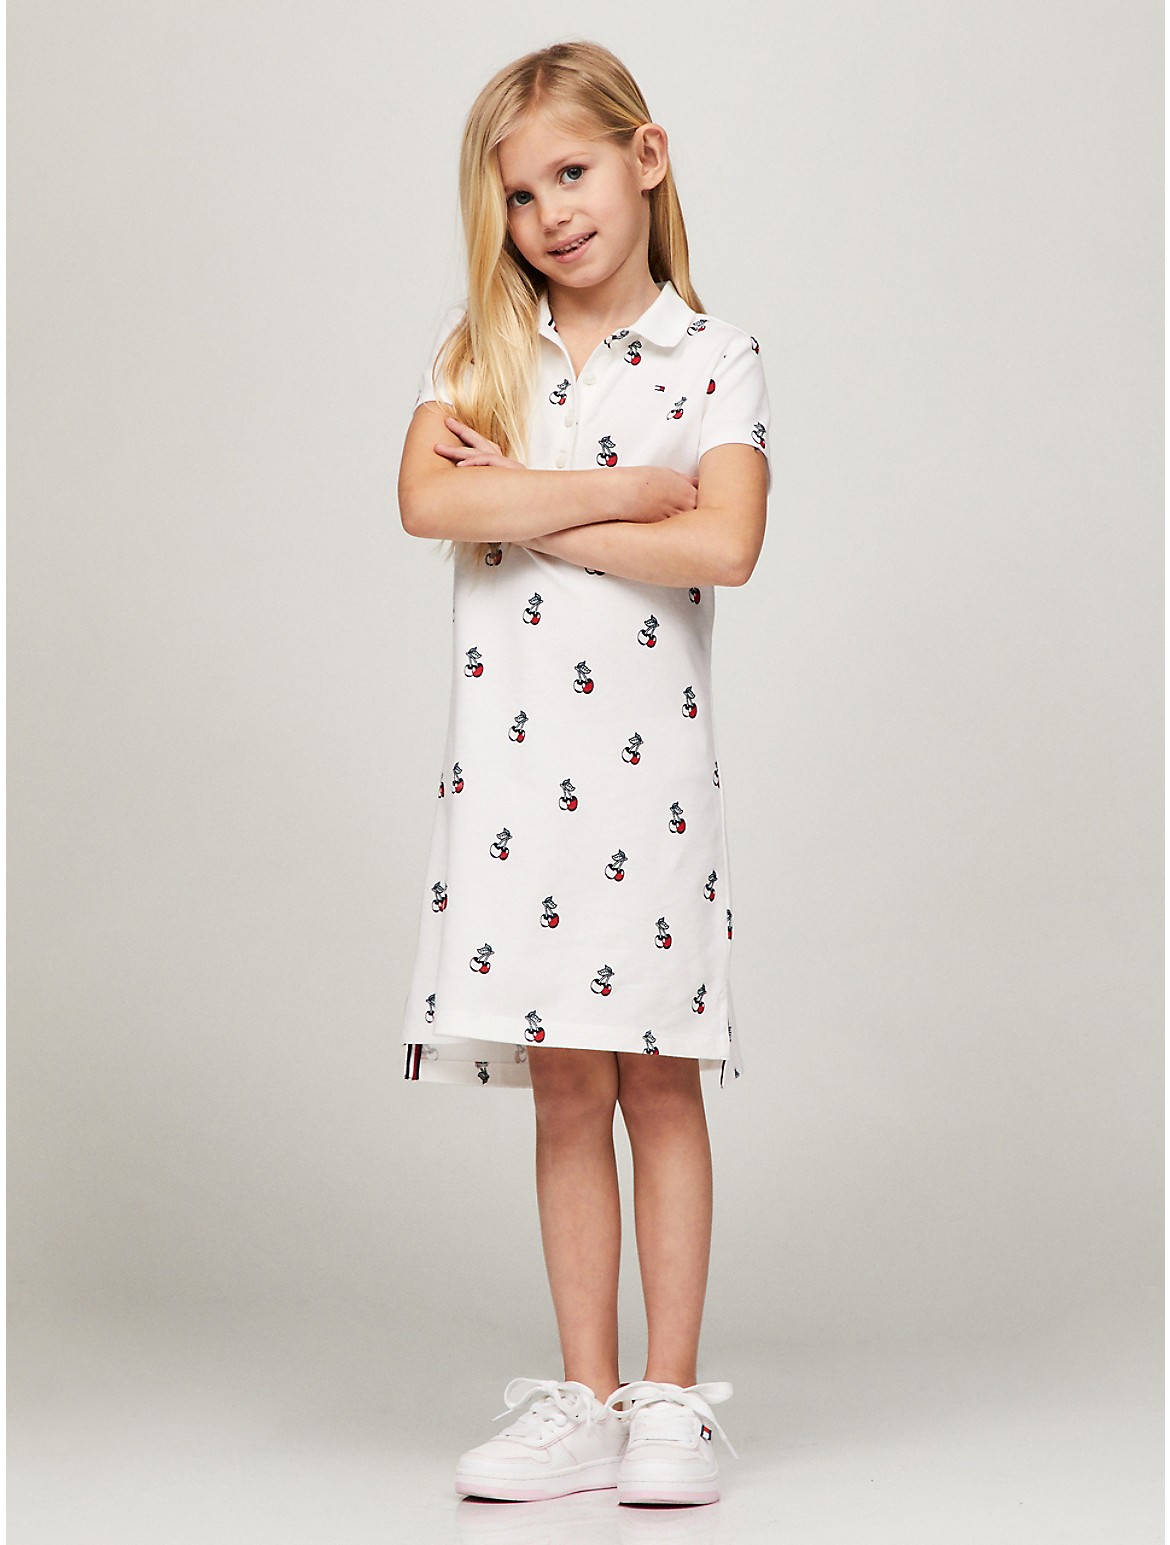 Tommy Hilfiger Girls' Kids' Cherry Stretch Pique Polo Dress